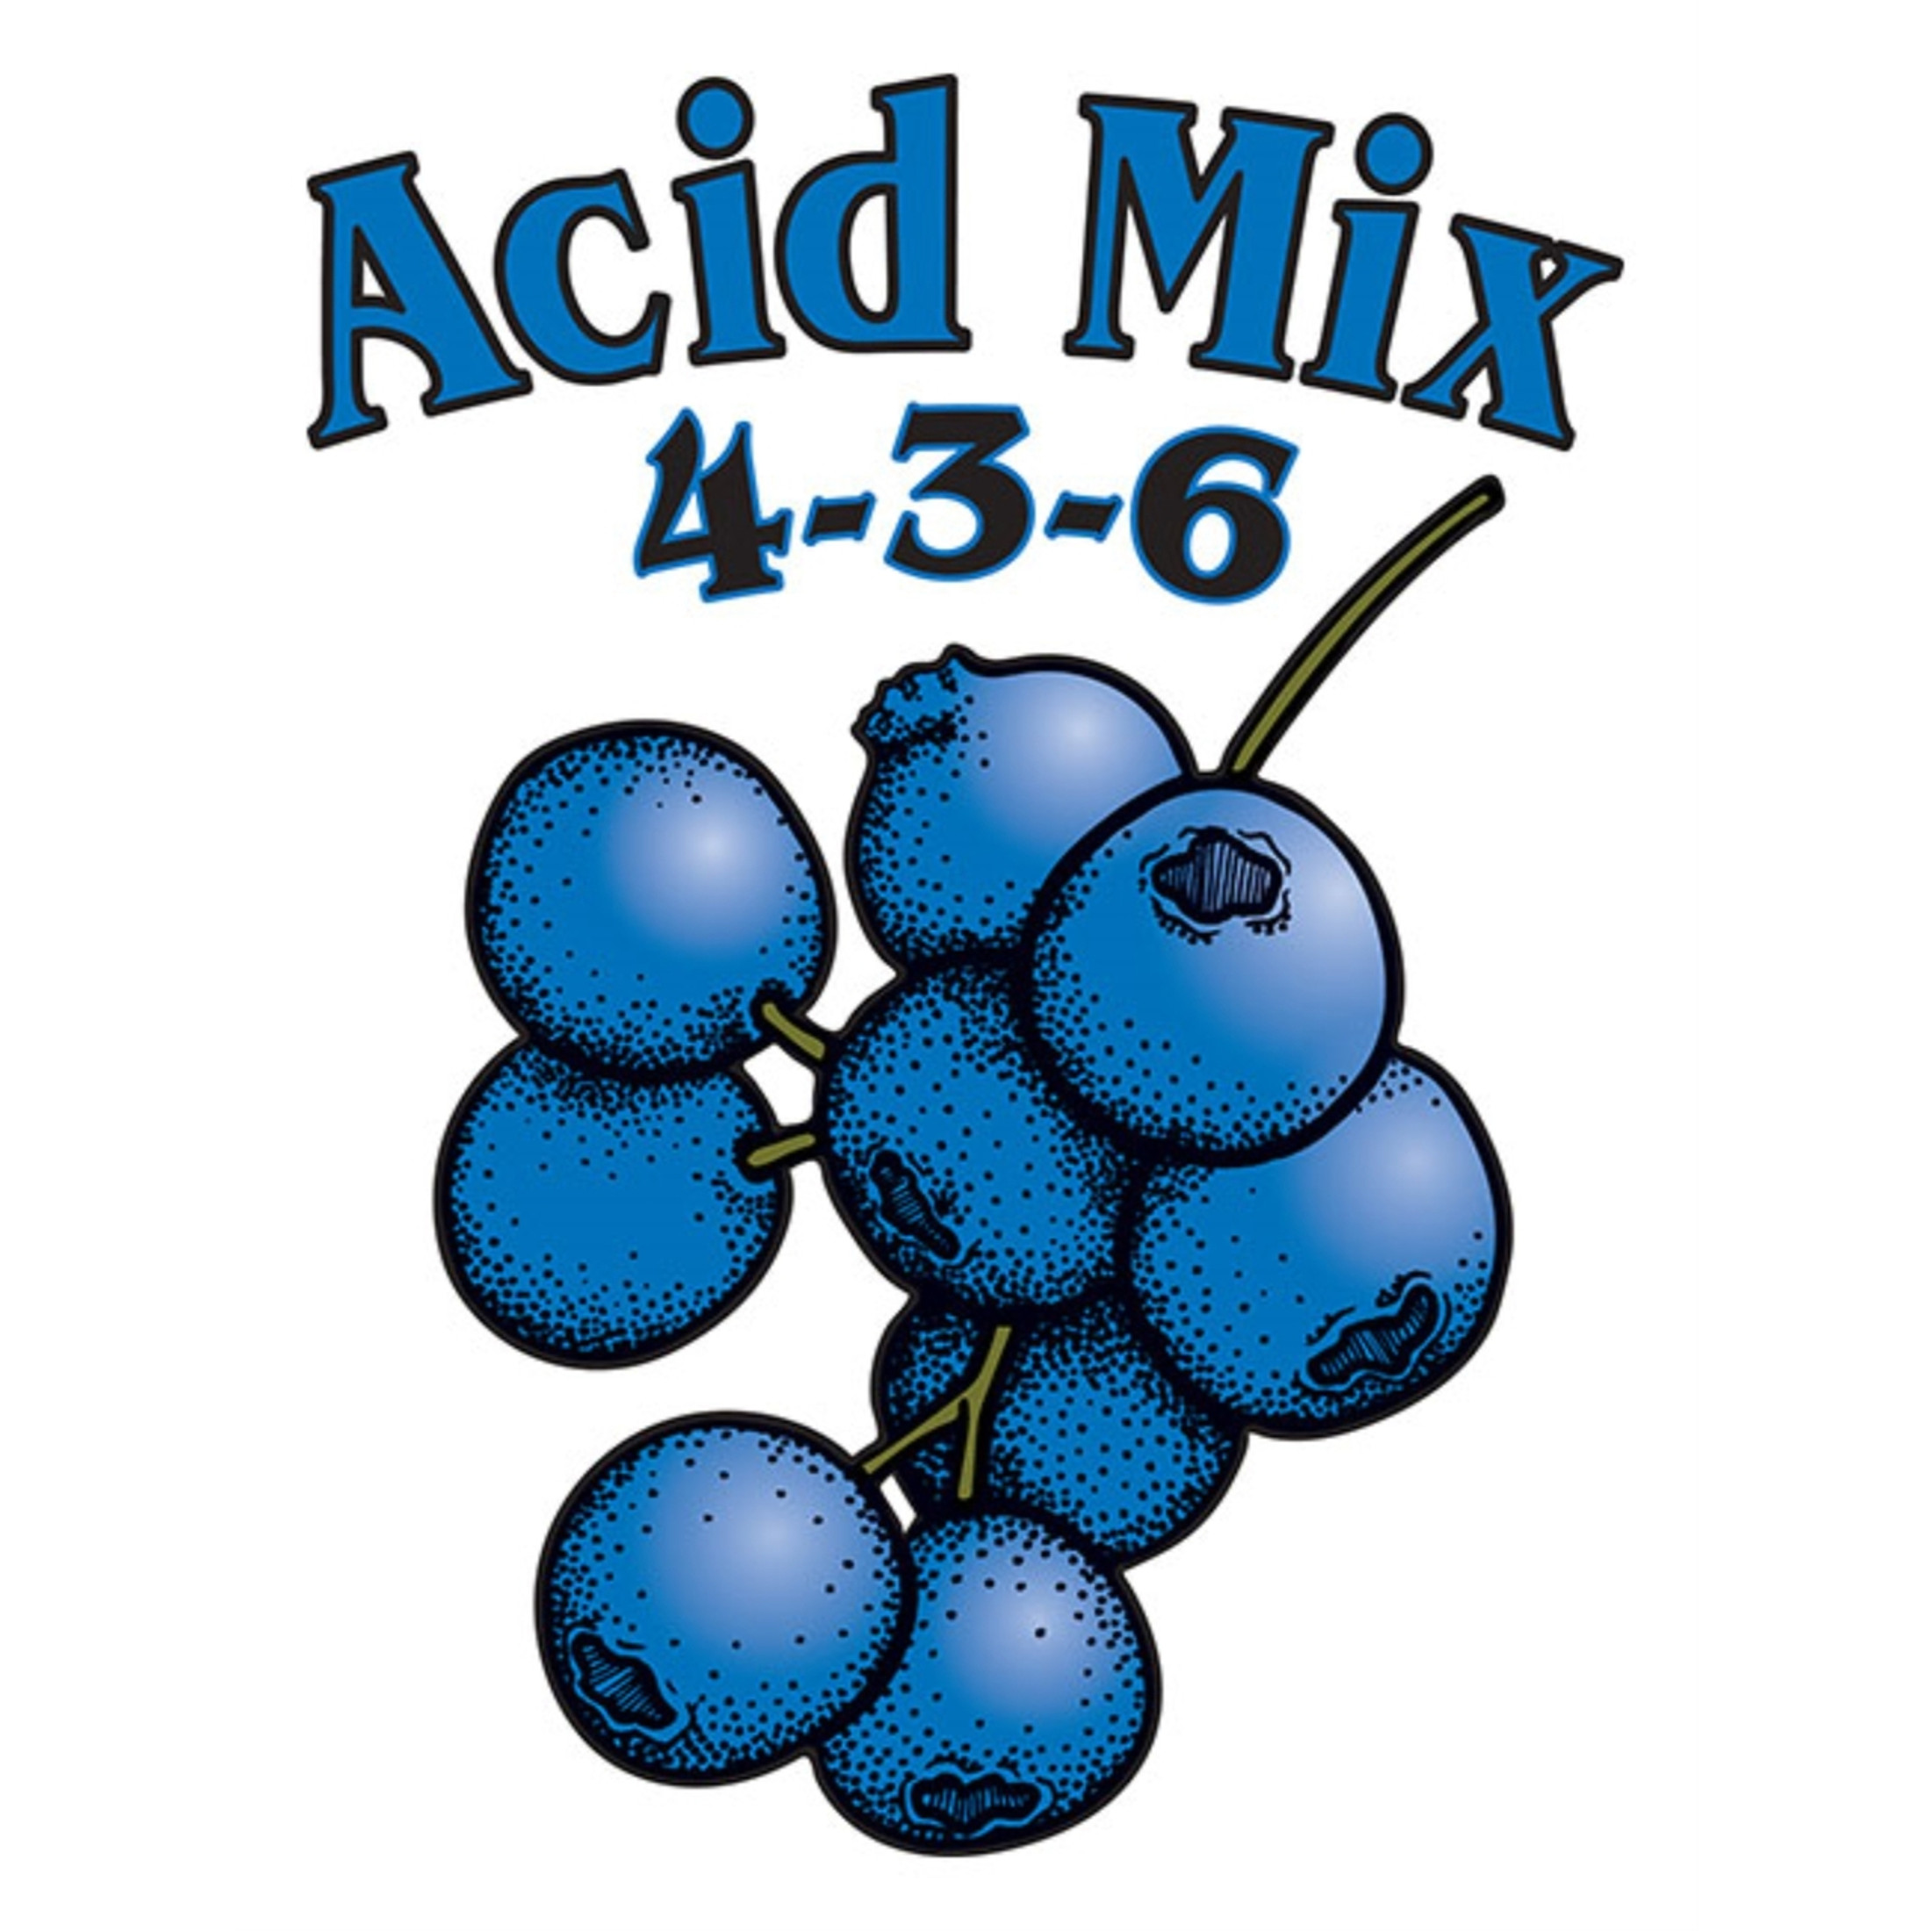 Down to Earth Organic Acid Fertilizers Mix 4-3-6, 25 lb